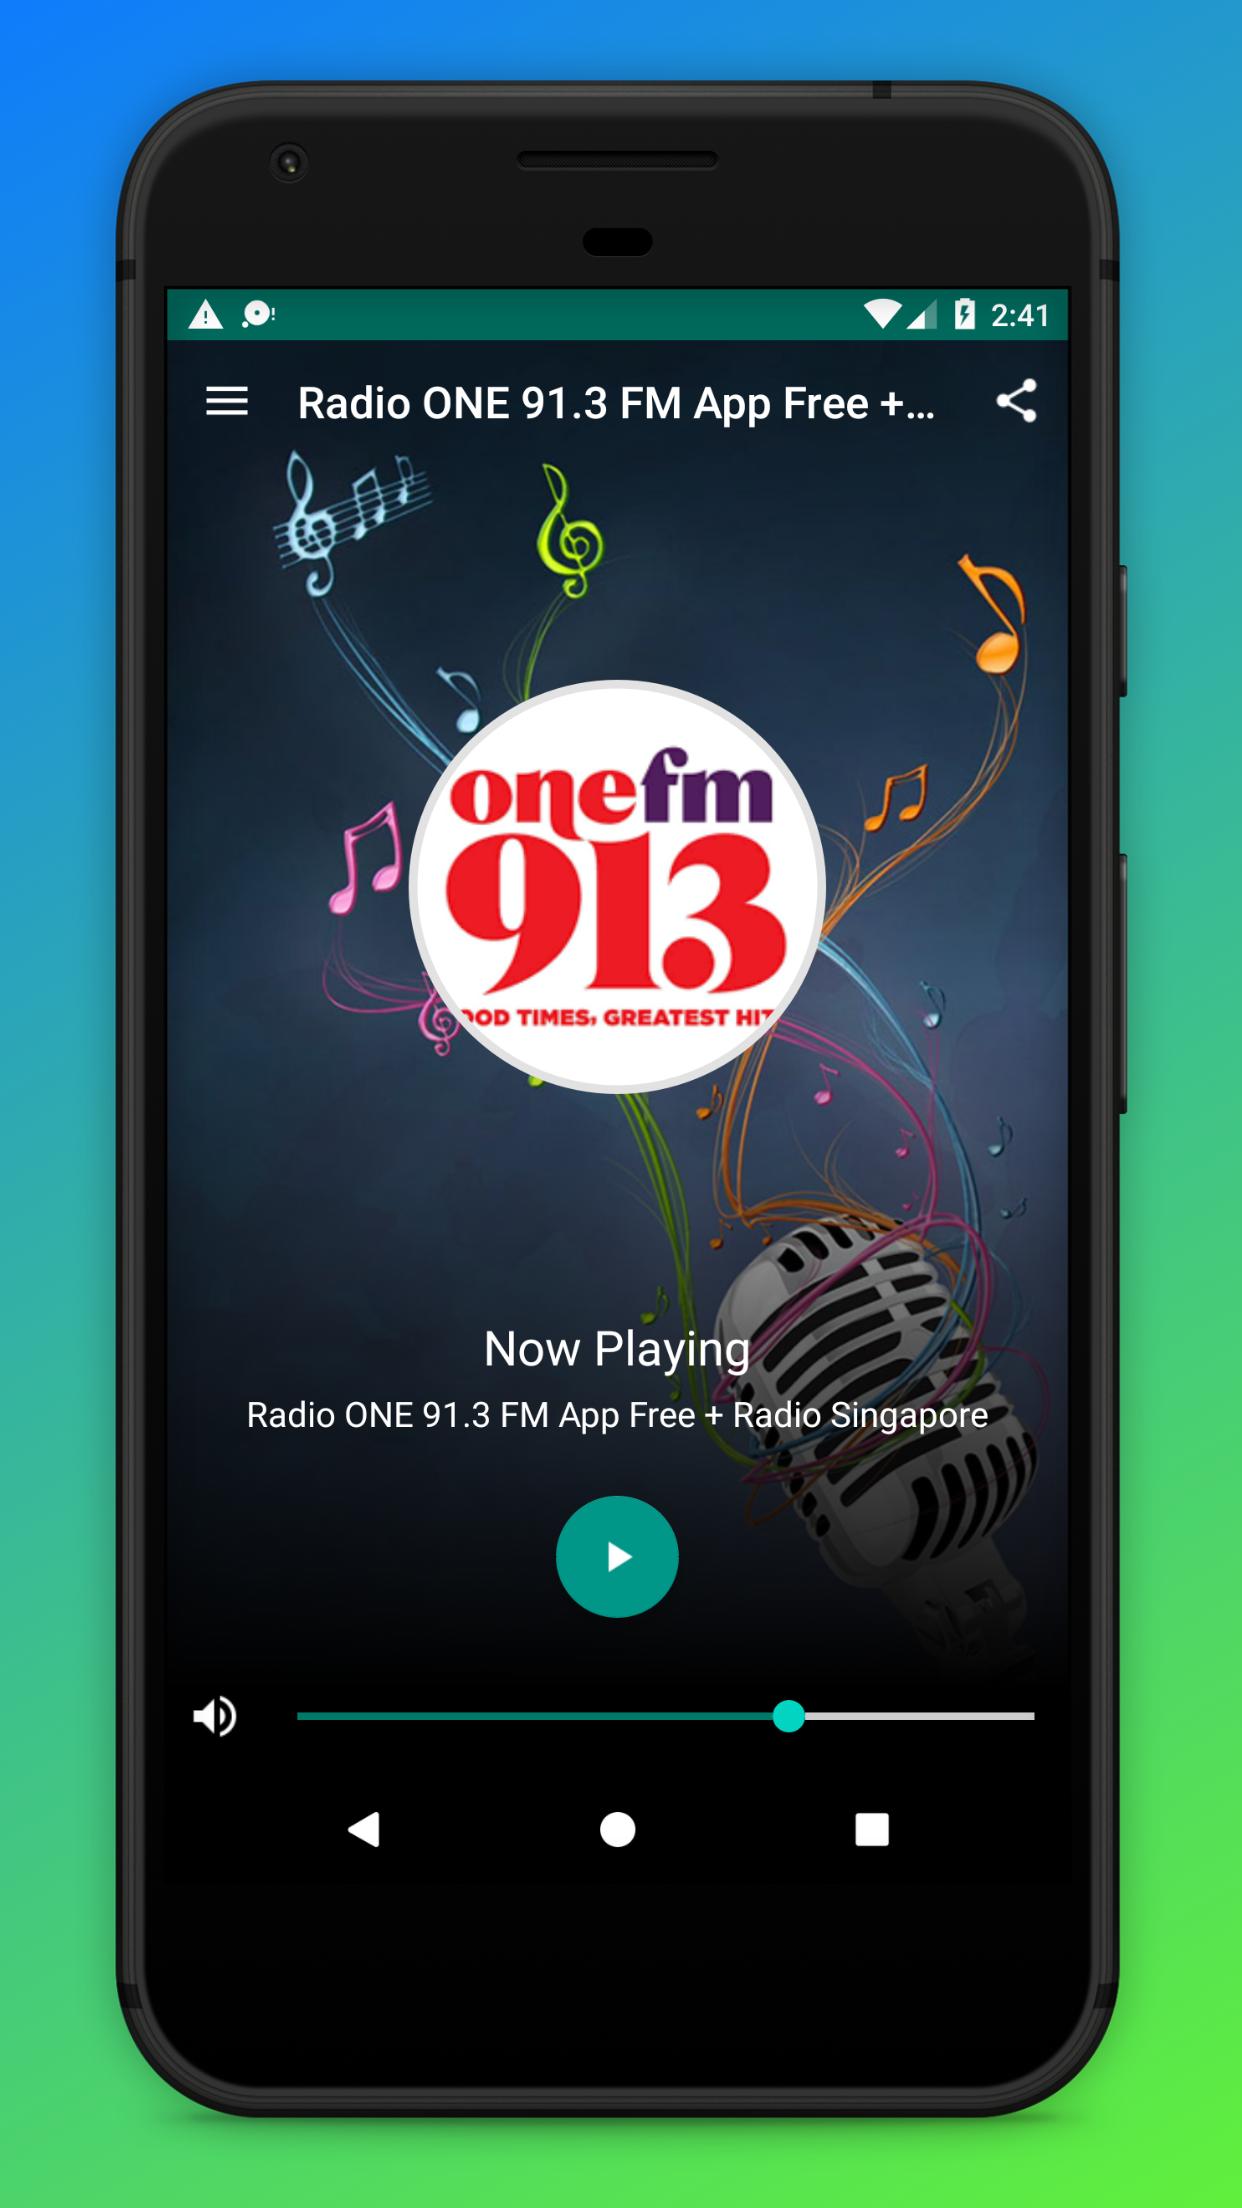 Radio ONE 91.3 FM App Free + Radio Singapore for Android - APK Download